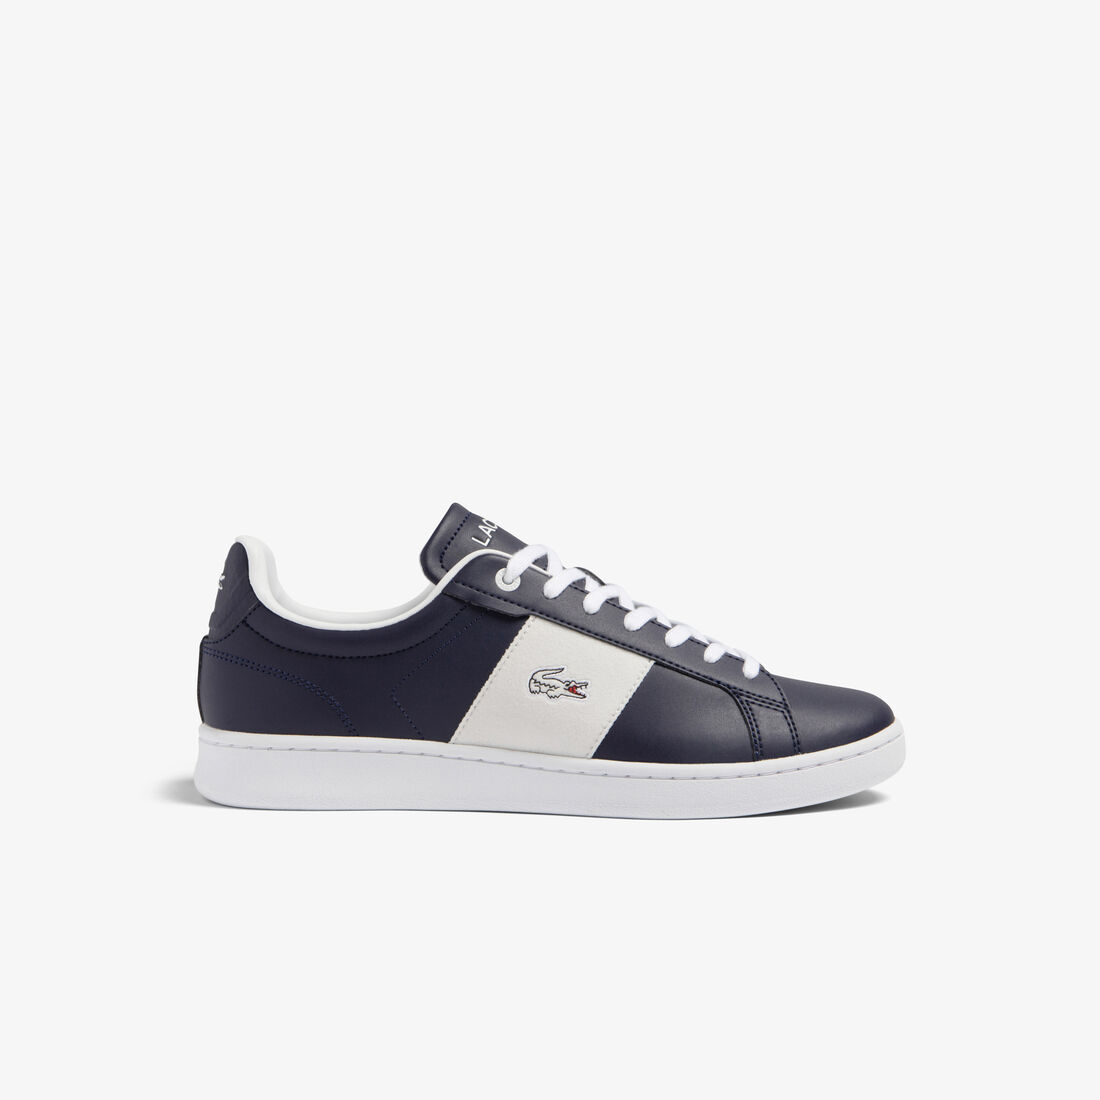 Lacoste Carnaby Pro Leder Colour Contrast Sneakers Herren Navy Weiß | TXRQ-67812